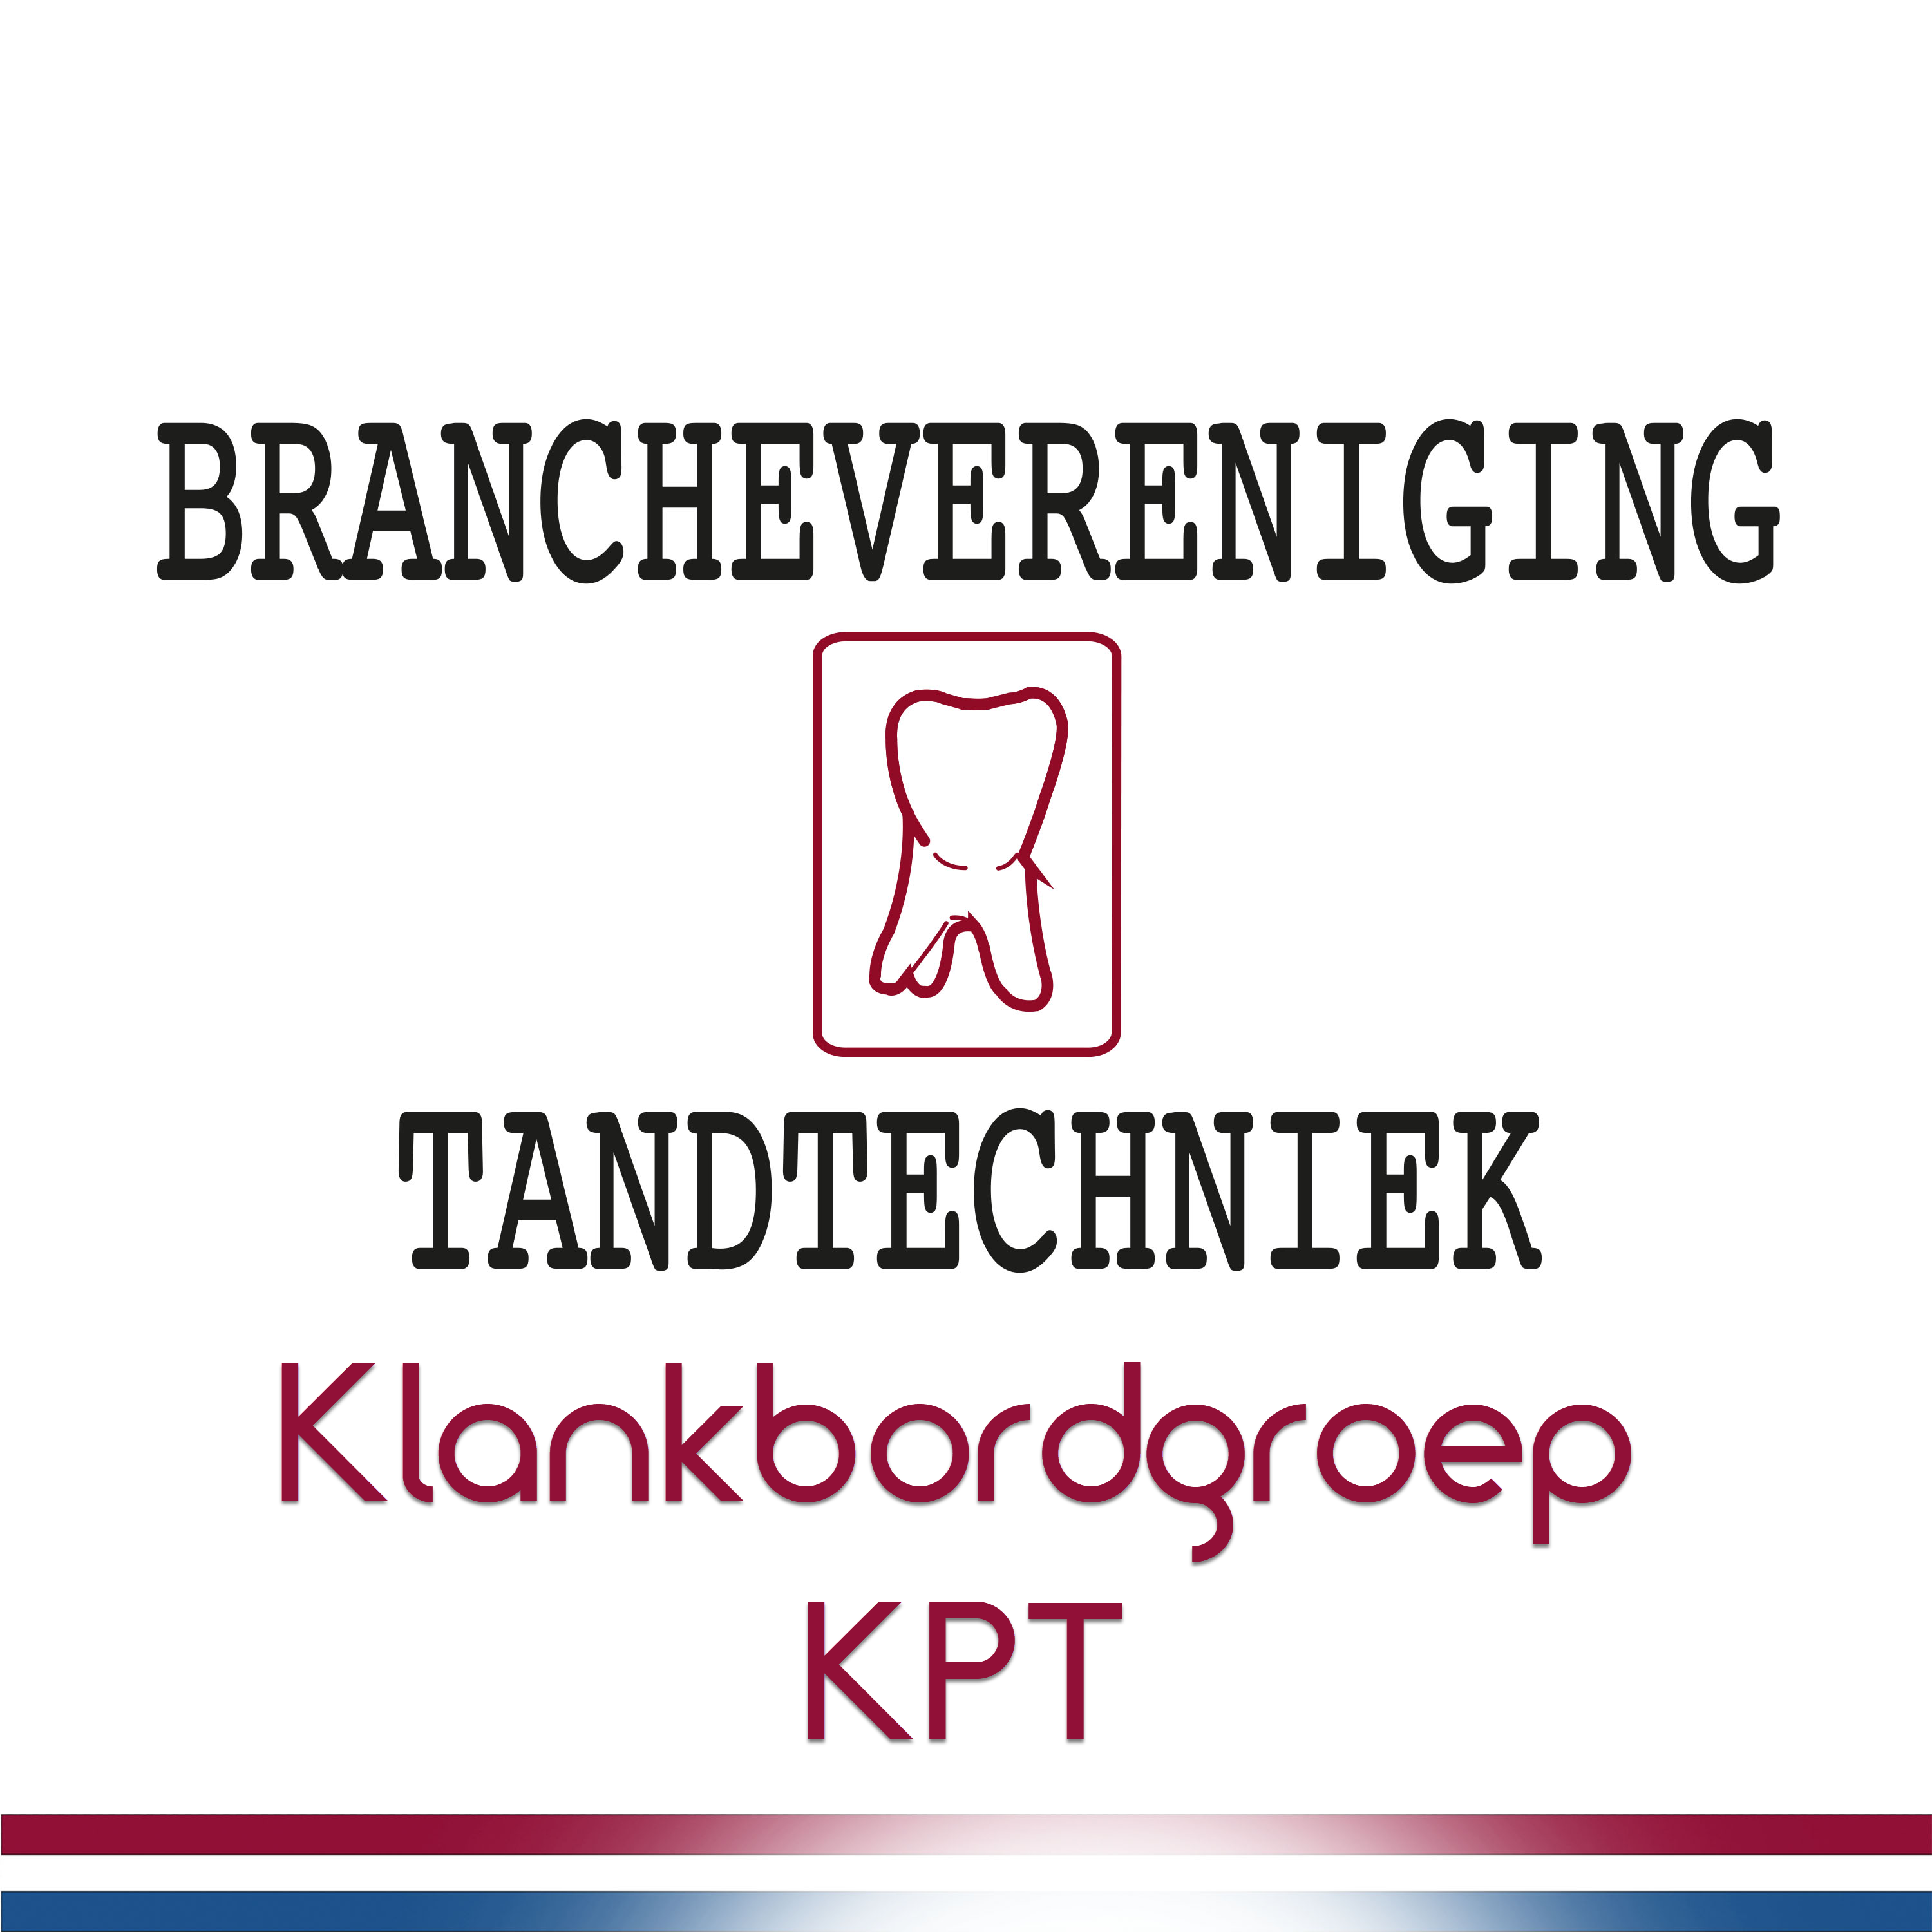 KPT Klankbordgroep logo